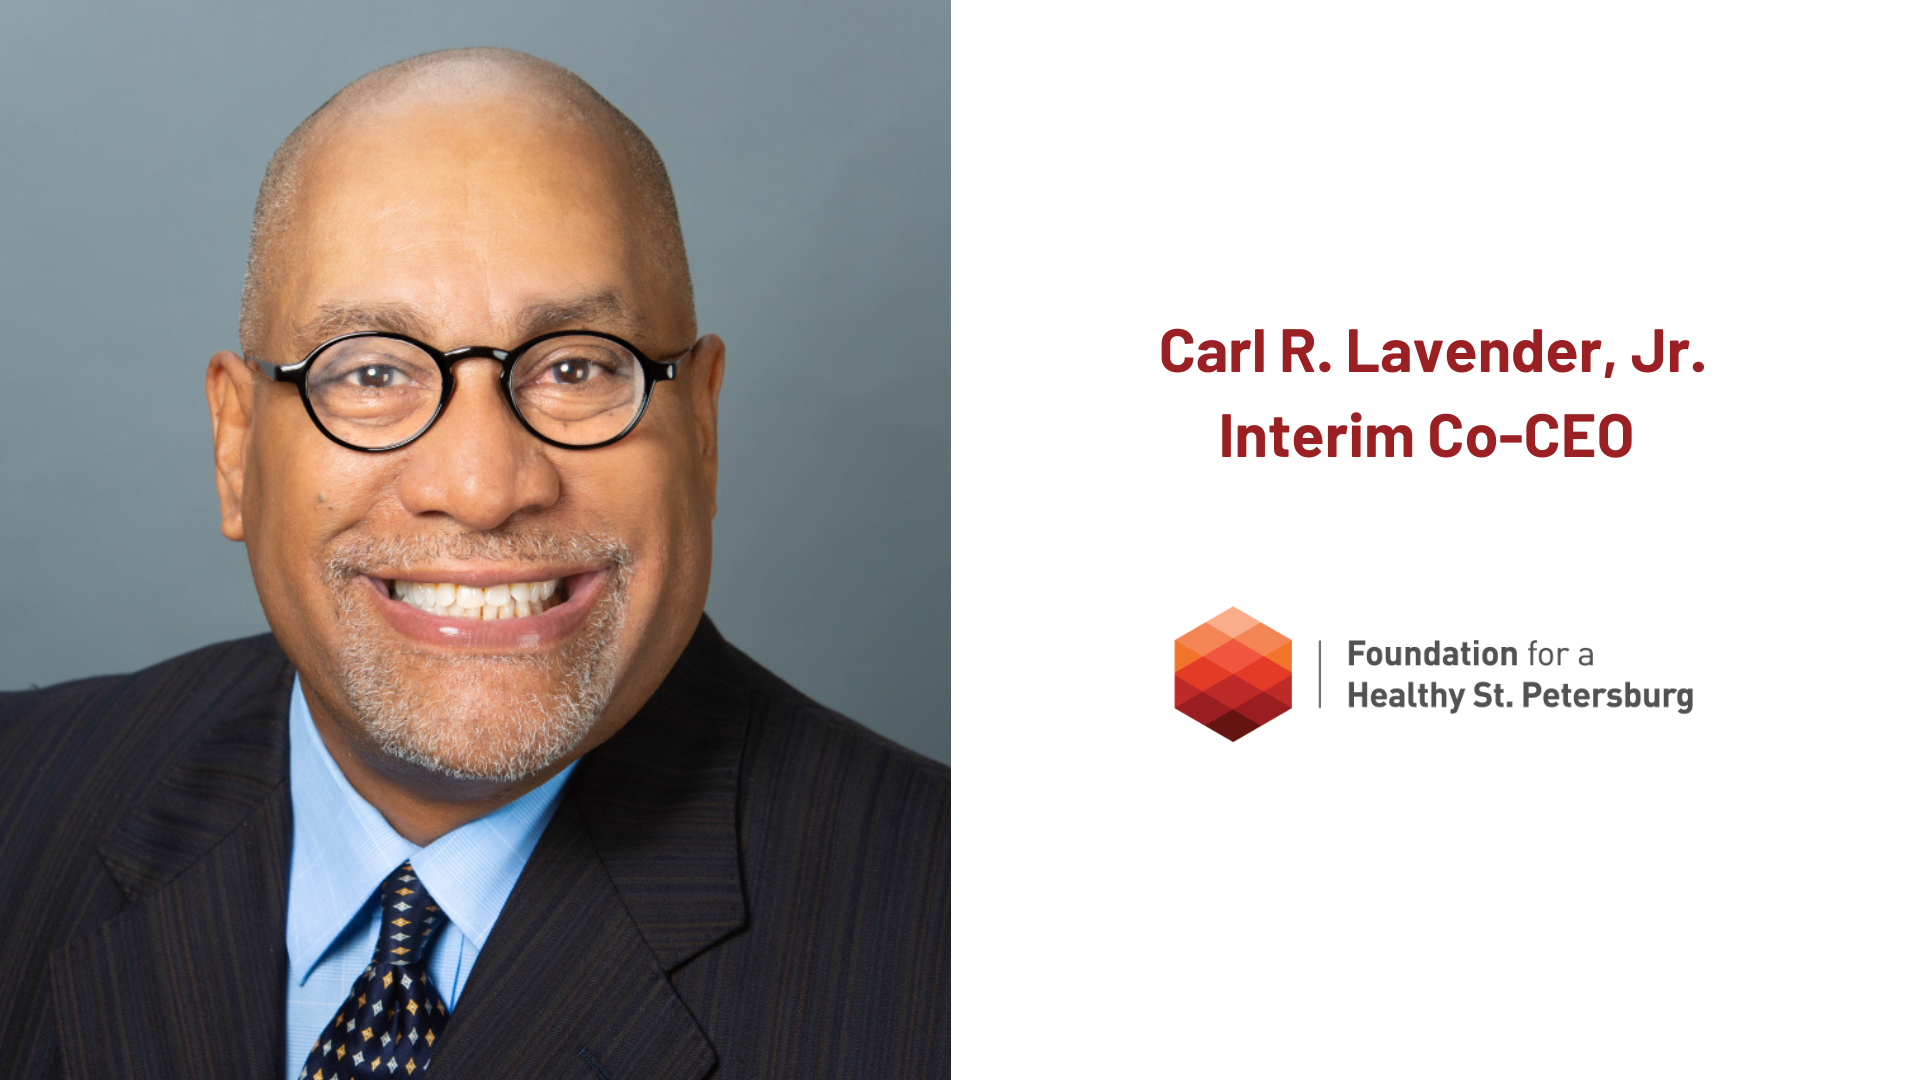 Carl R. Lavender, Jr., Interim Co-CEO of the Foundation